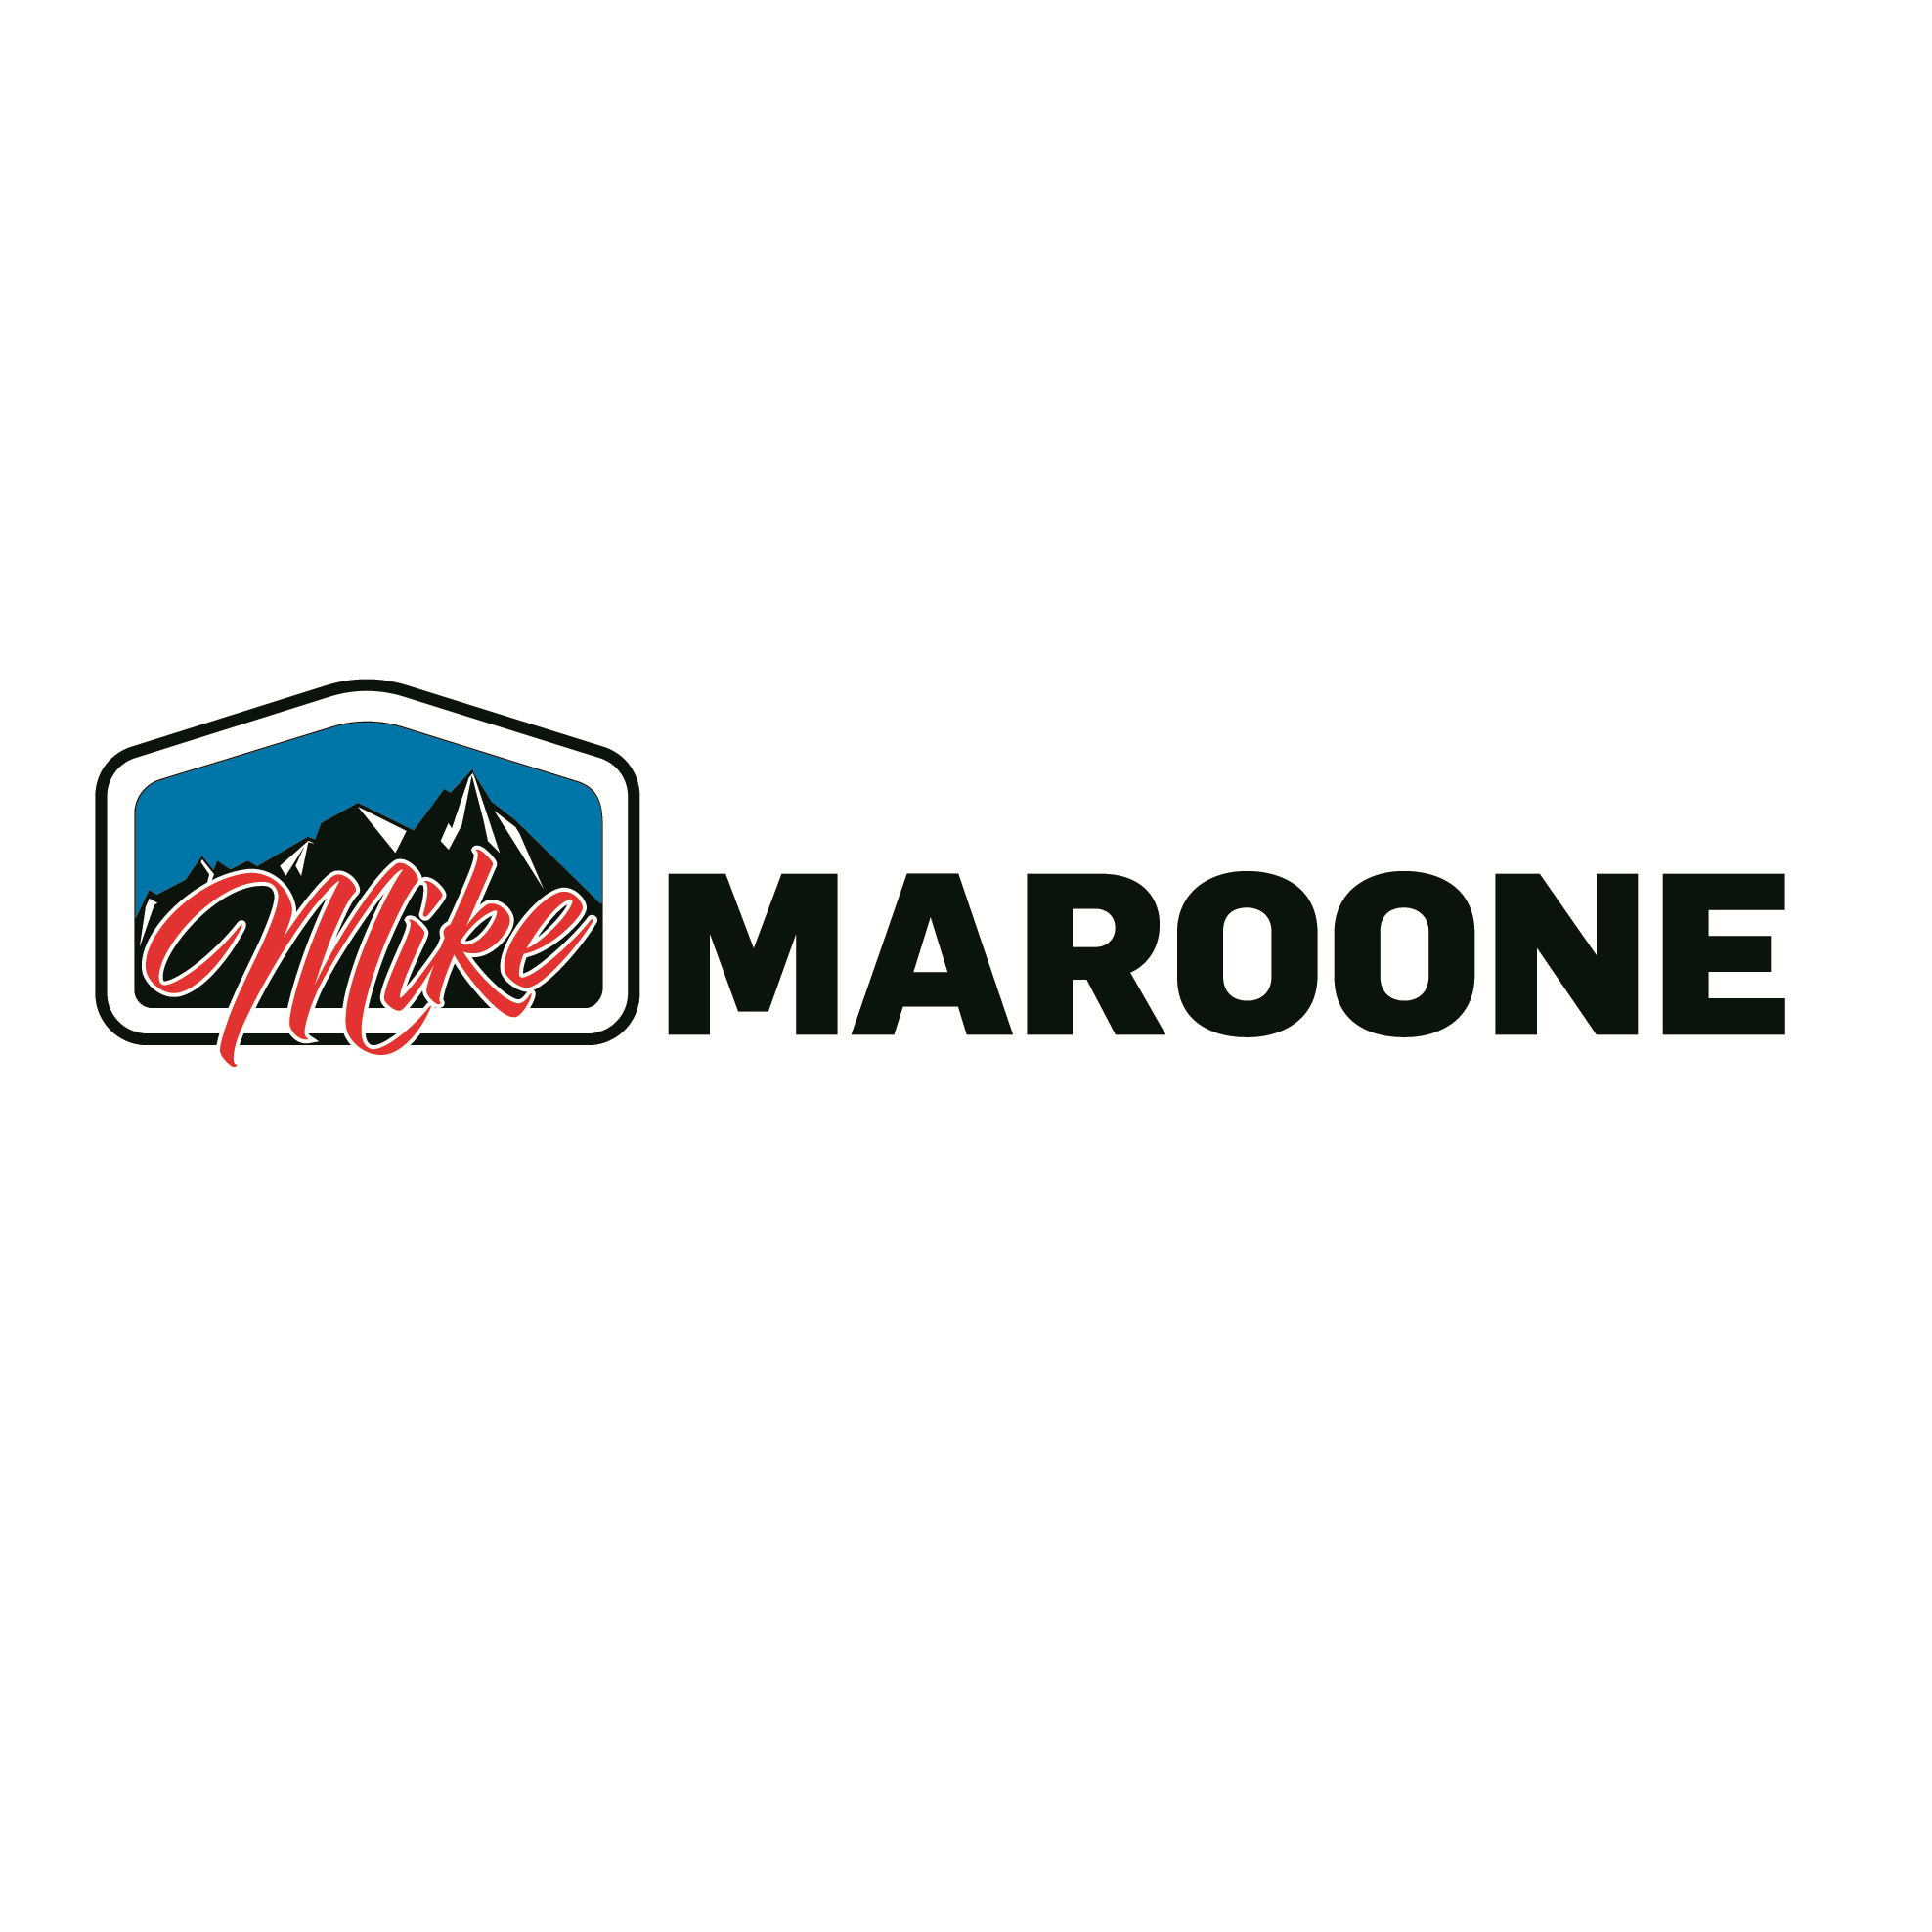 Mike Maroone Collision Center Logo